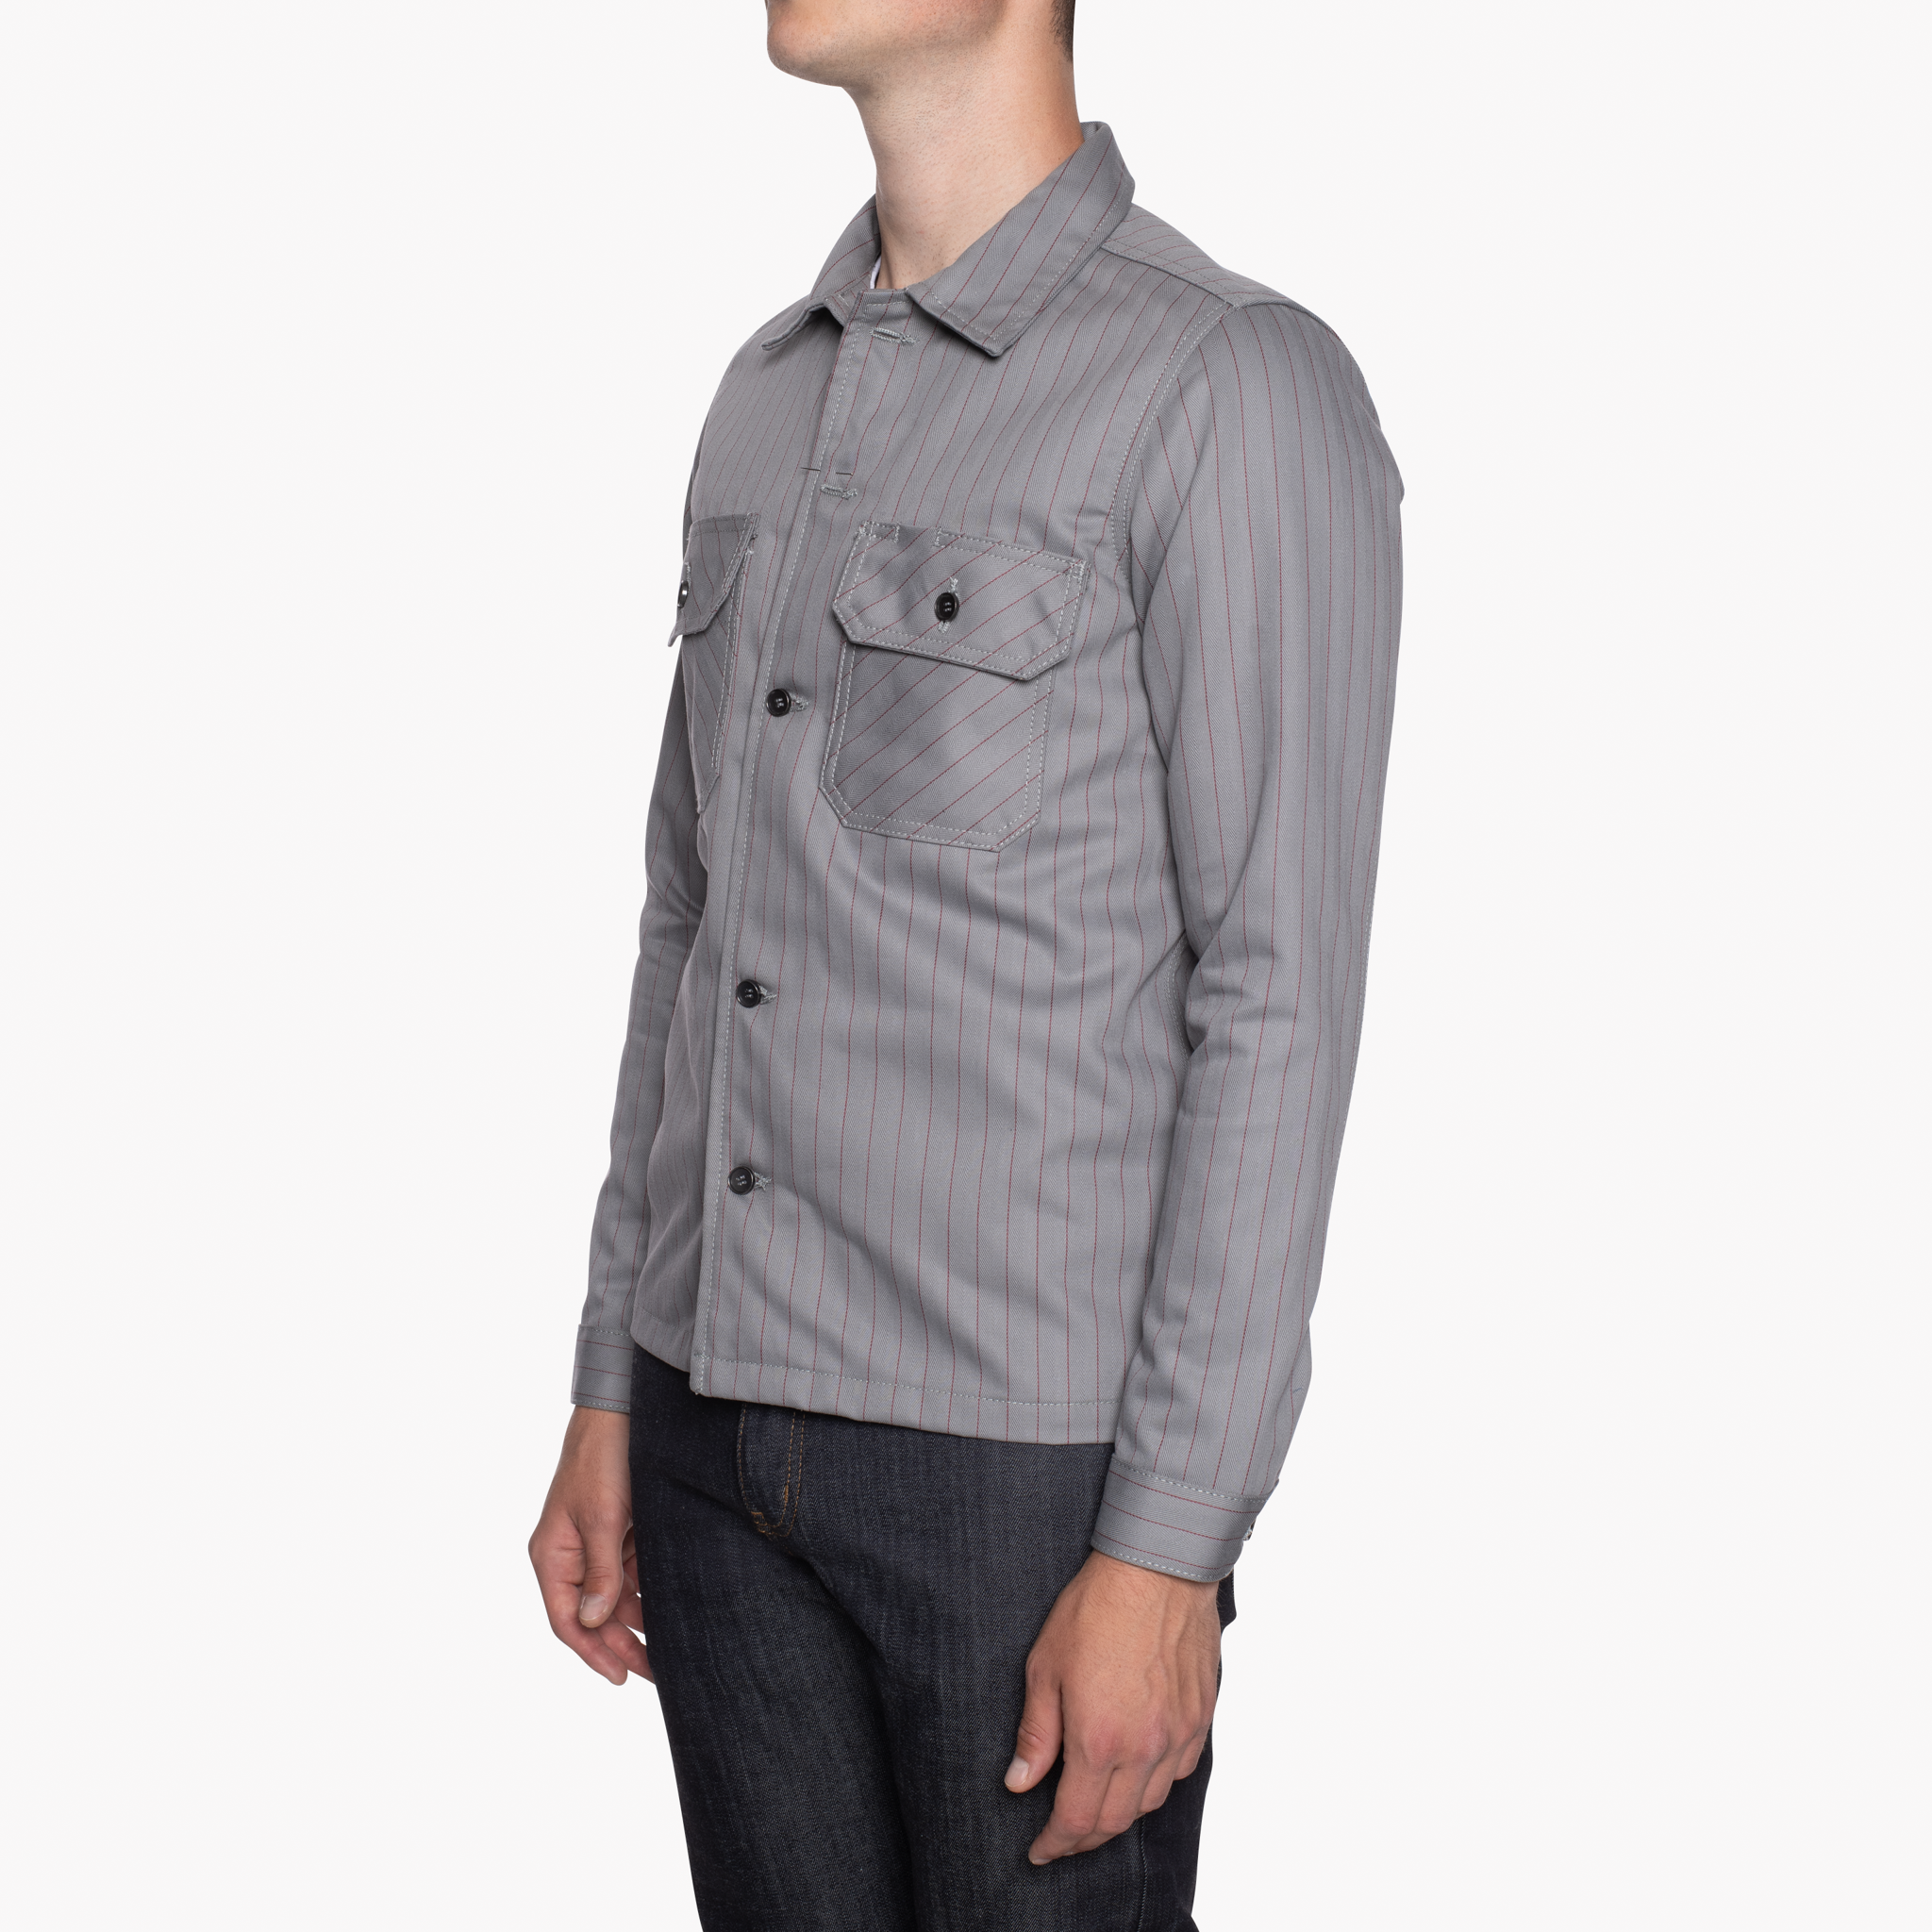  Work Shirt - Repro Workwear Twill - Grey - side 